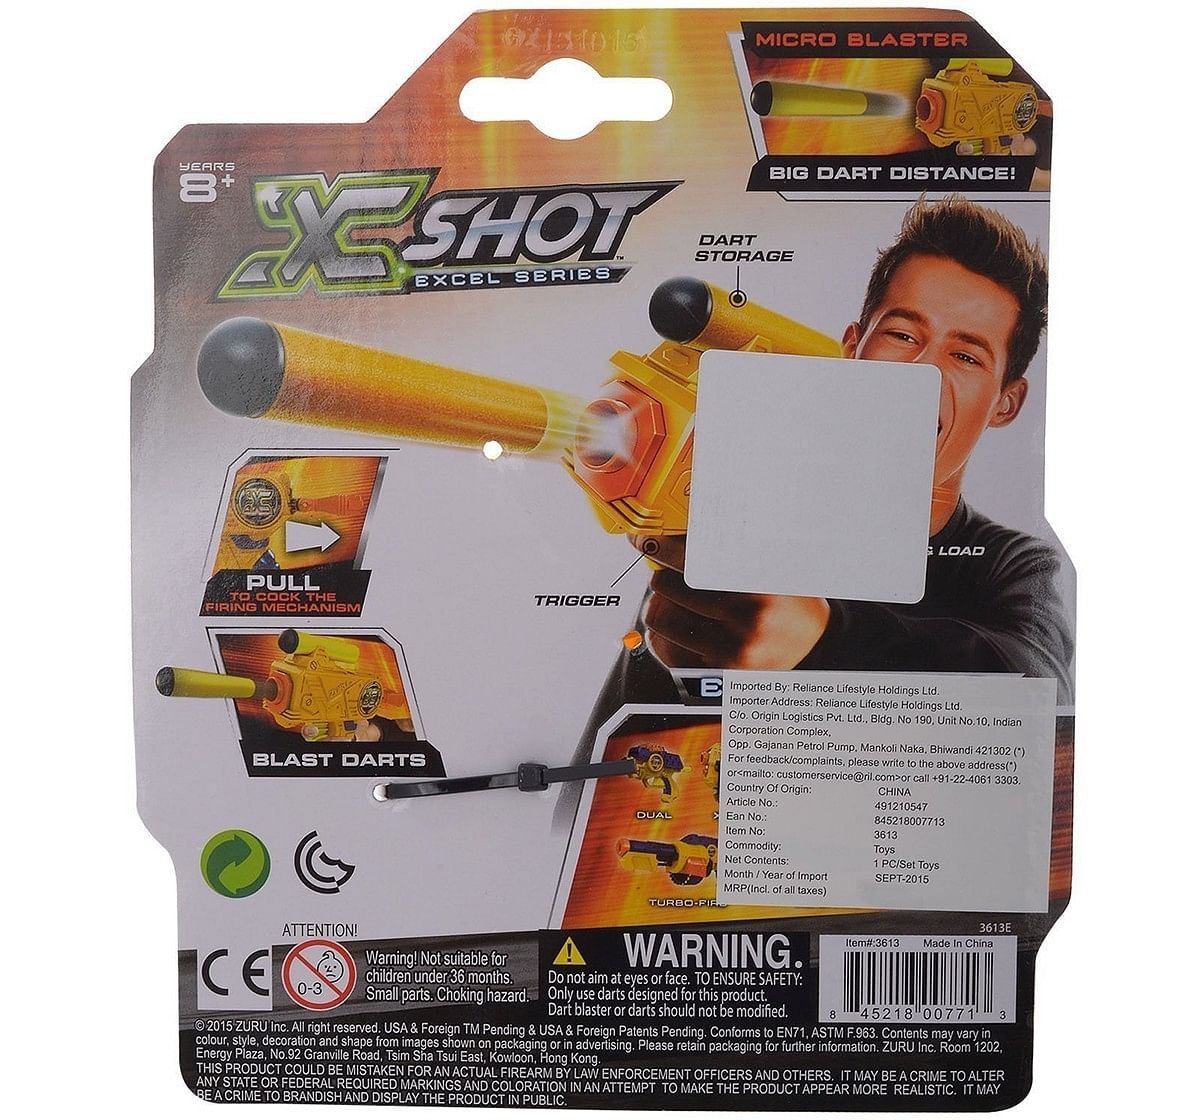 X-Shot Micro Dart  Blasters for Kids age 8Y+ 